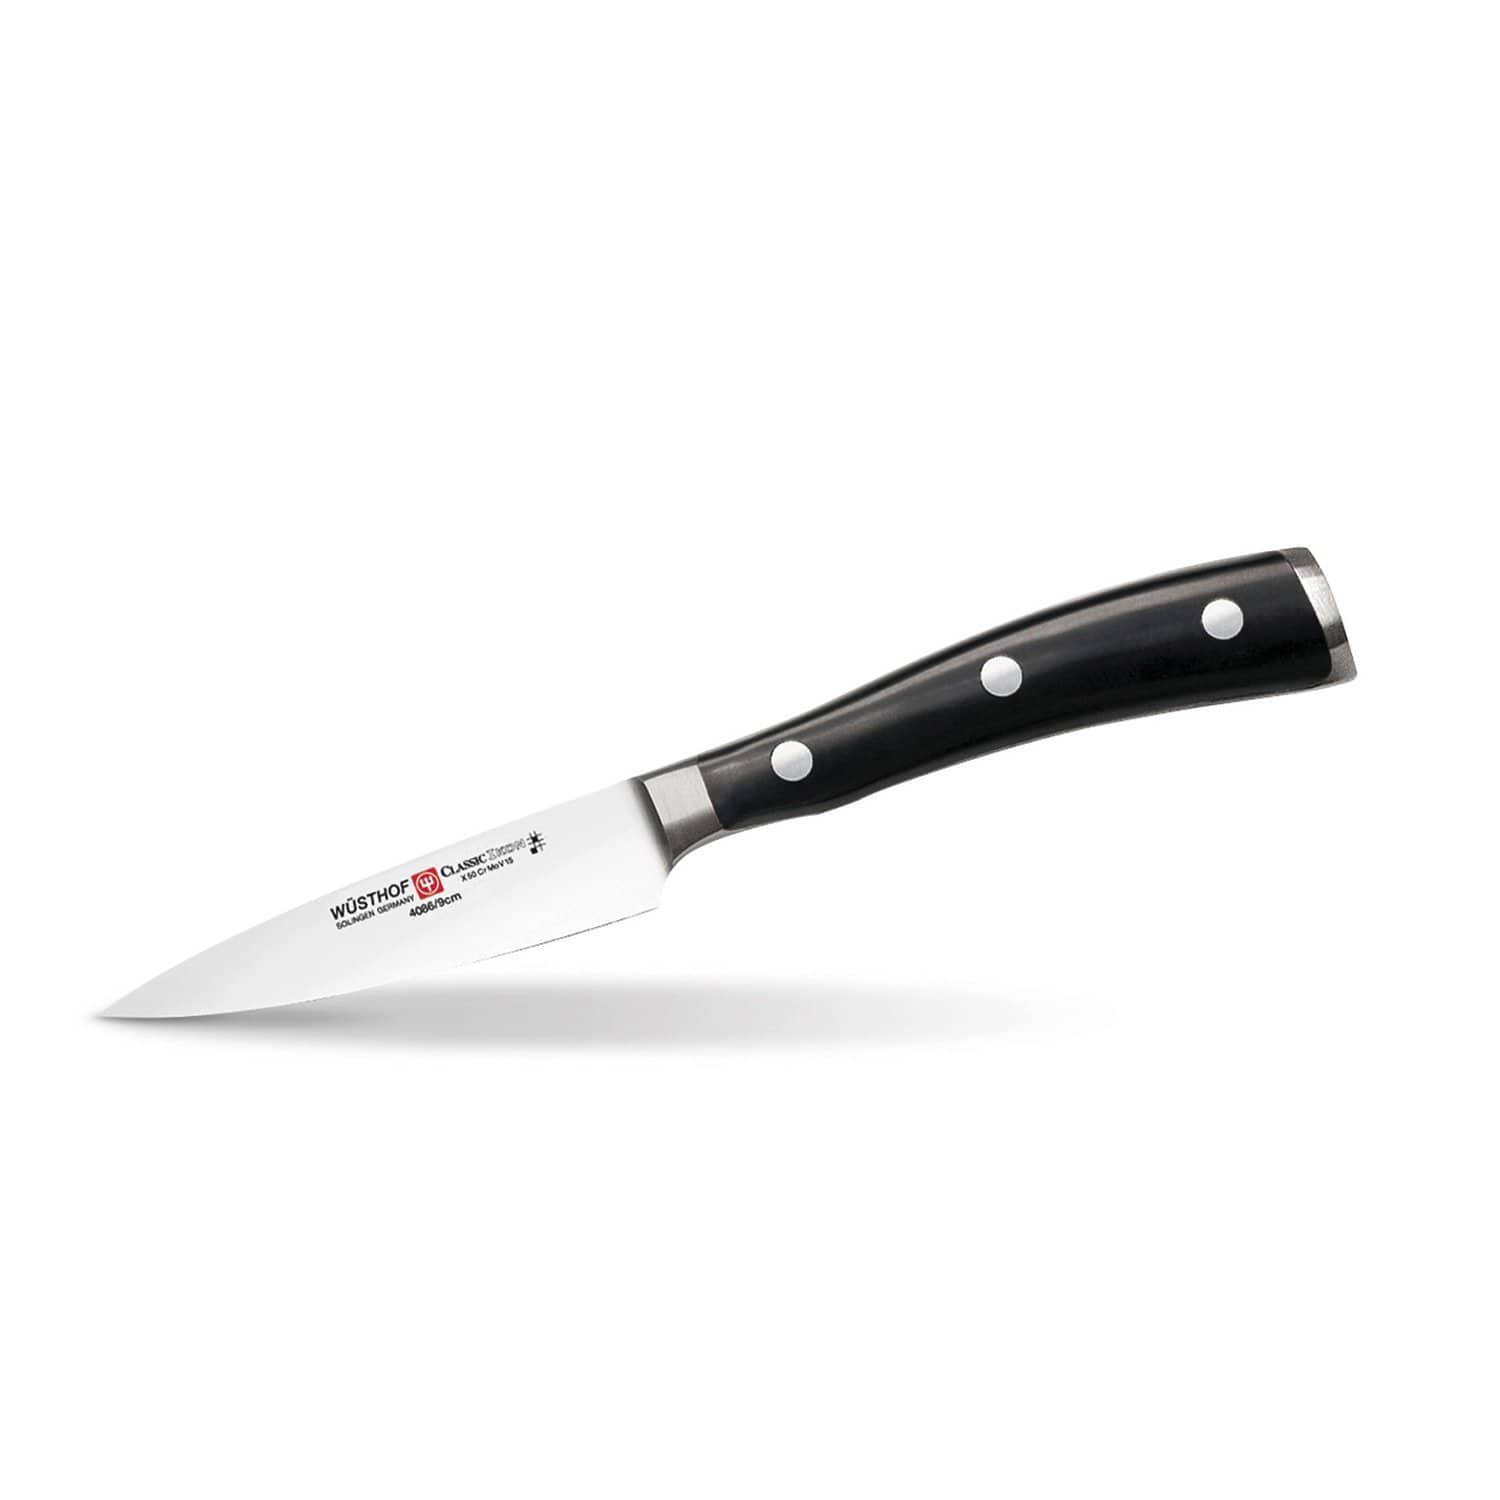 Wusthof Classic Ikon Paring Knife - Black and Silver, 3.5 inch - 798612 - Jashanmal Home